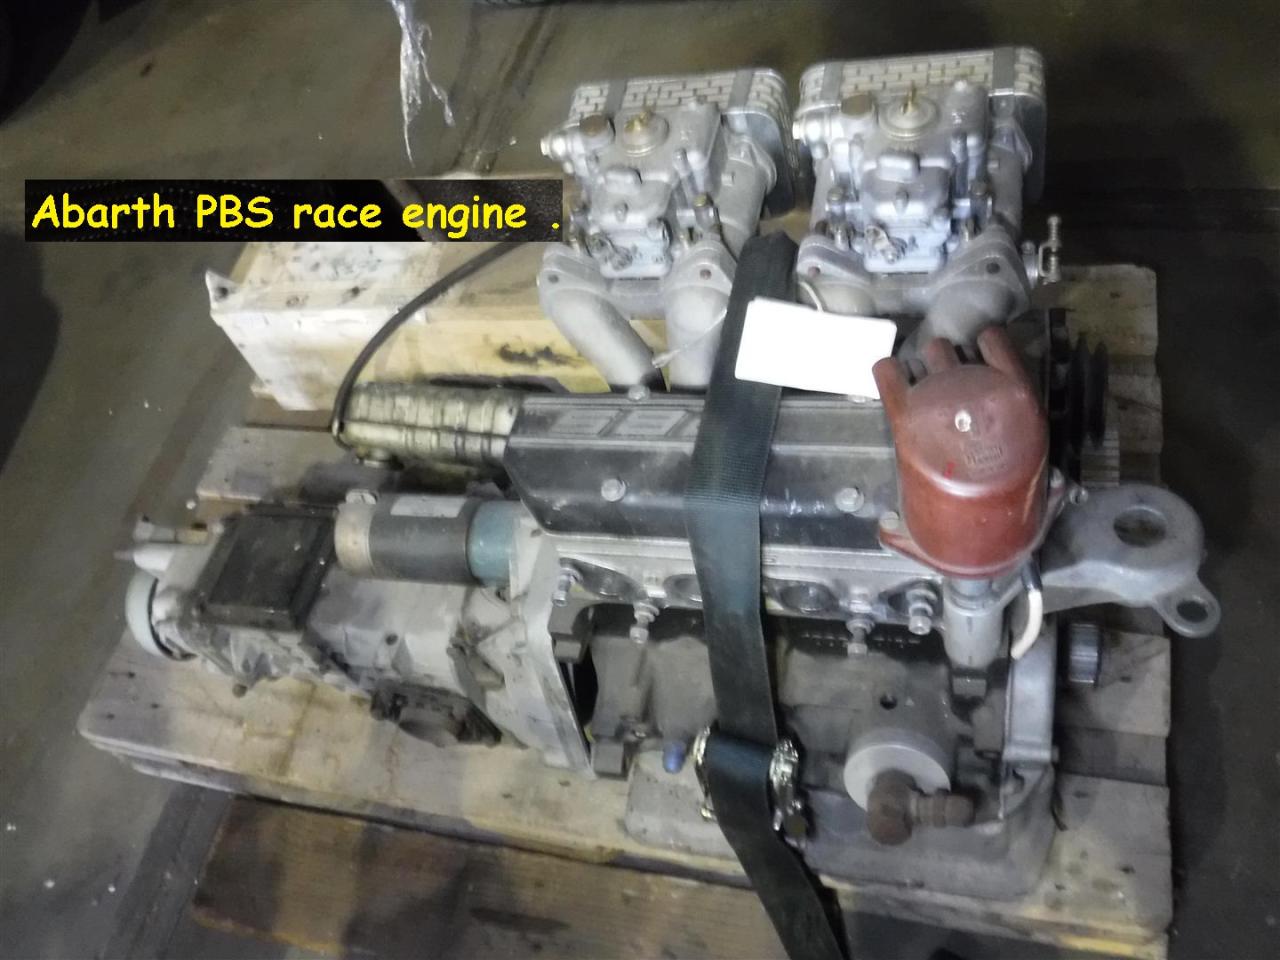 1900 Abarth engine PBS race